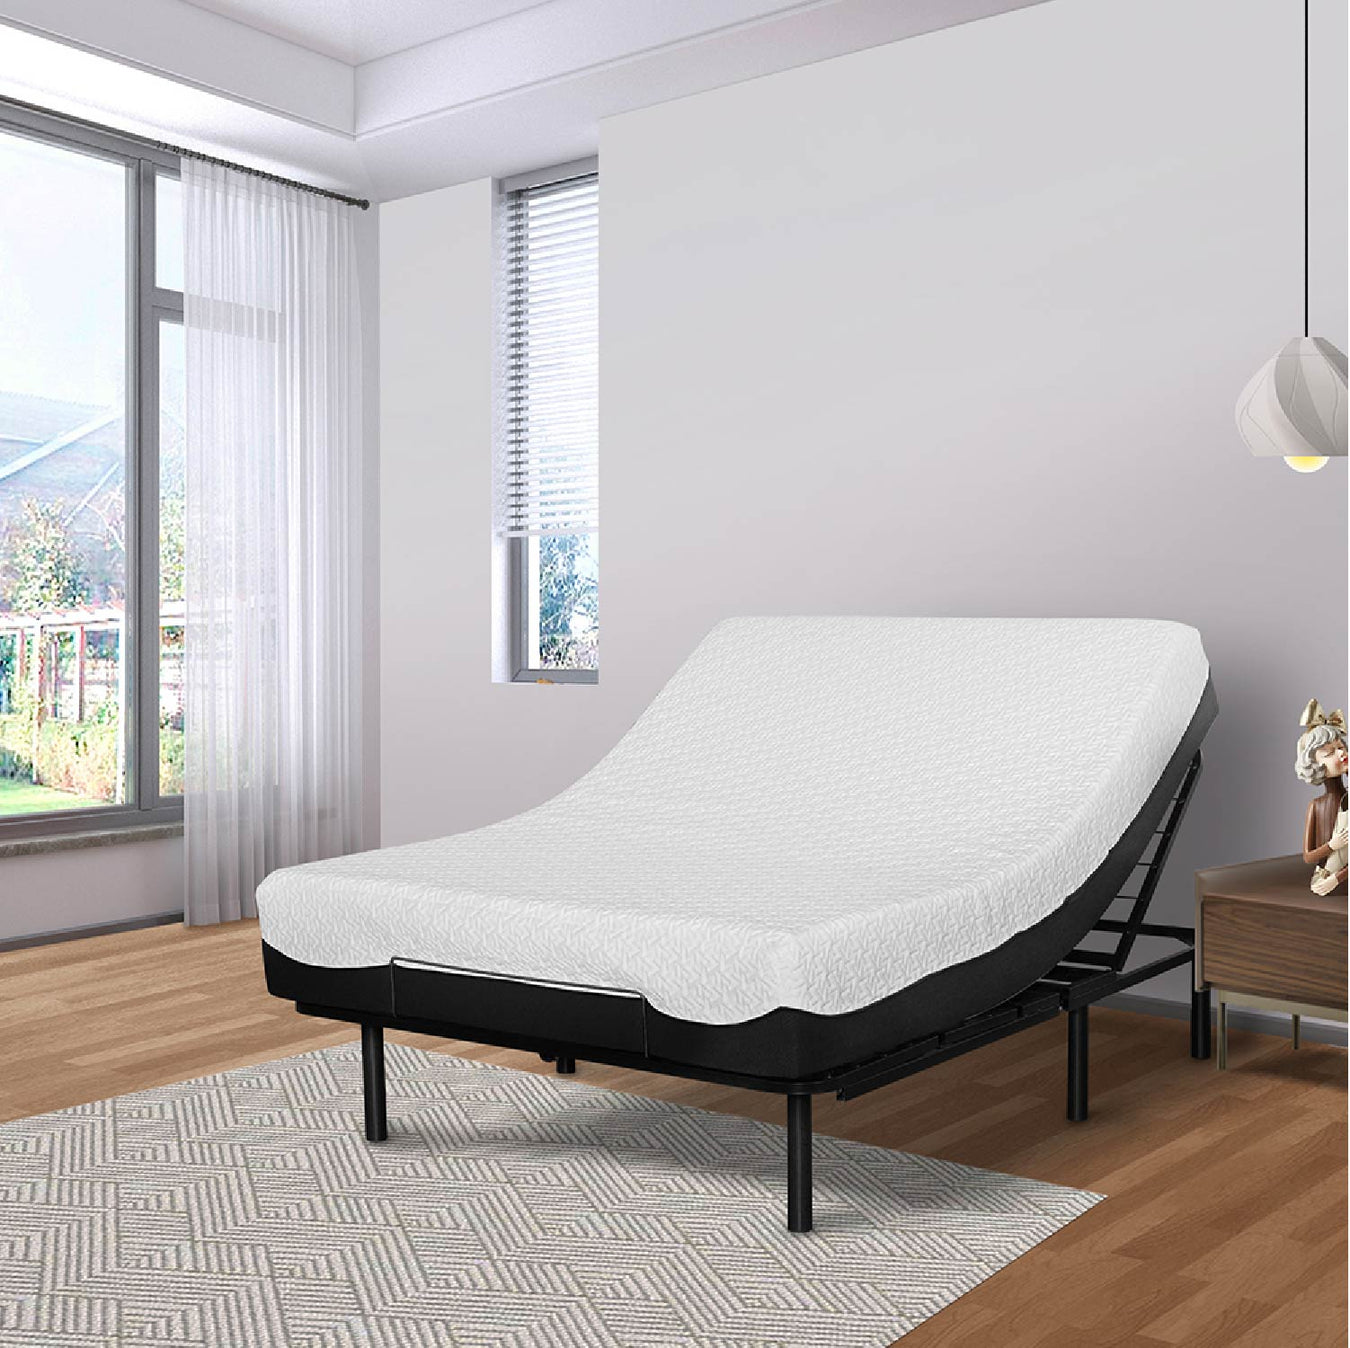 goto bed base, g50, adjustable bed base, sleeping upright, rest